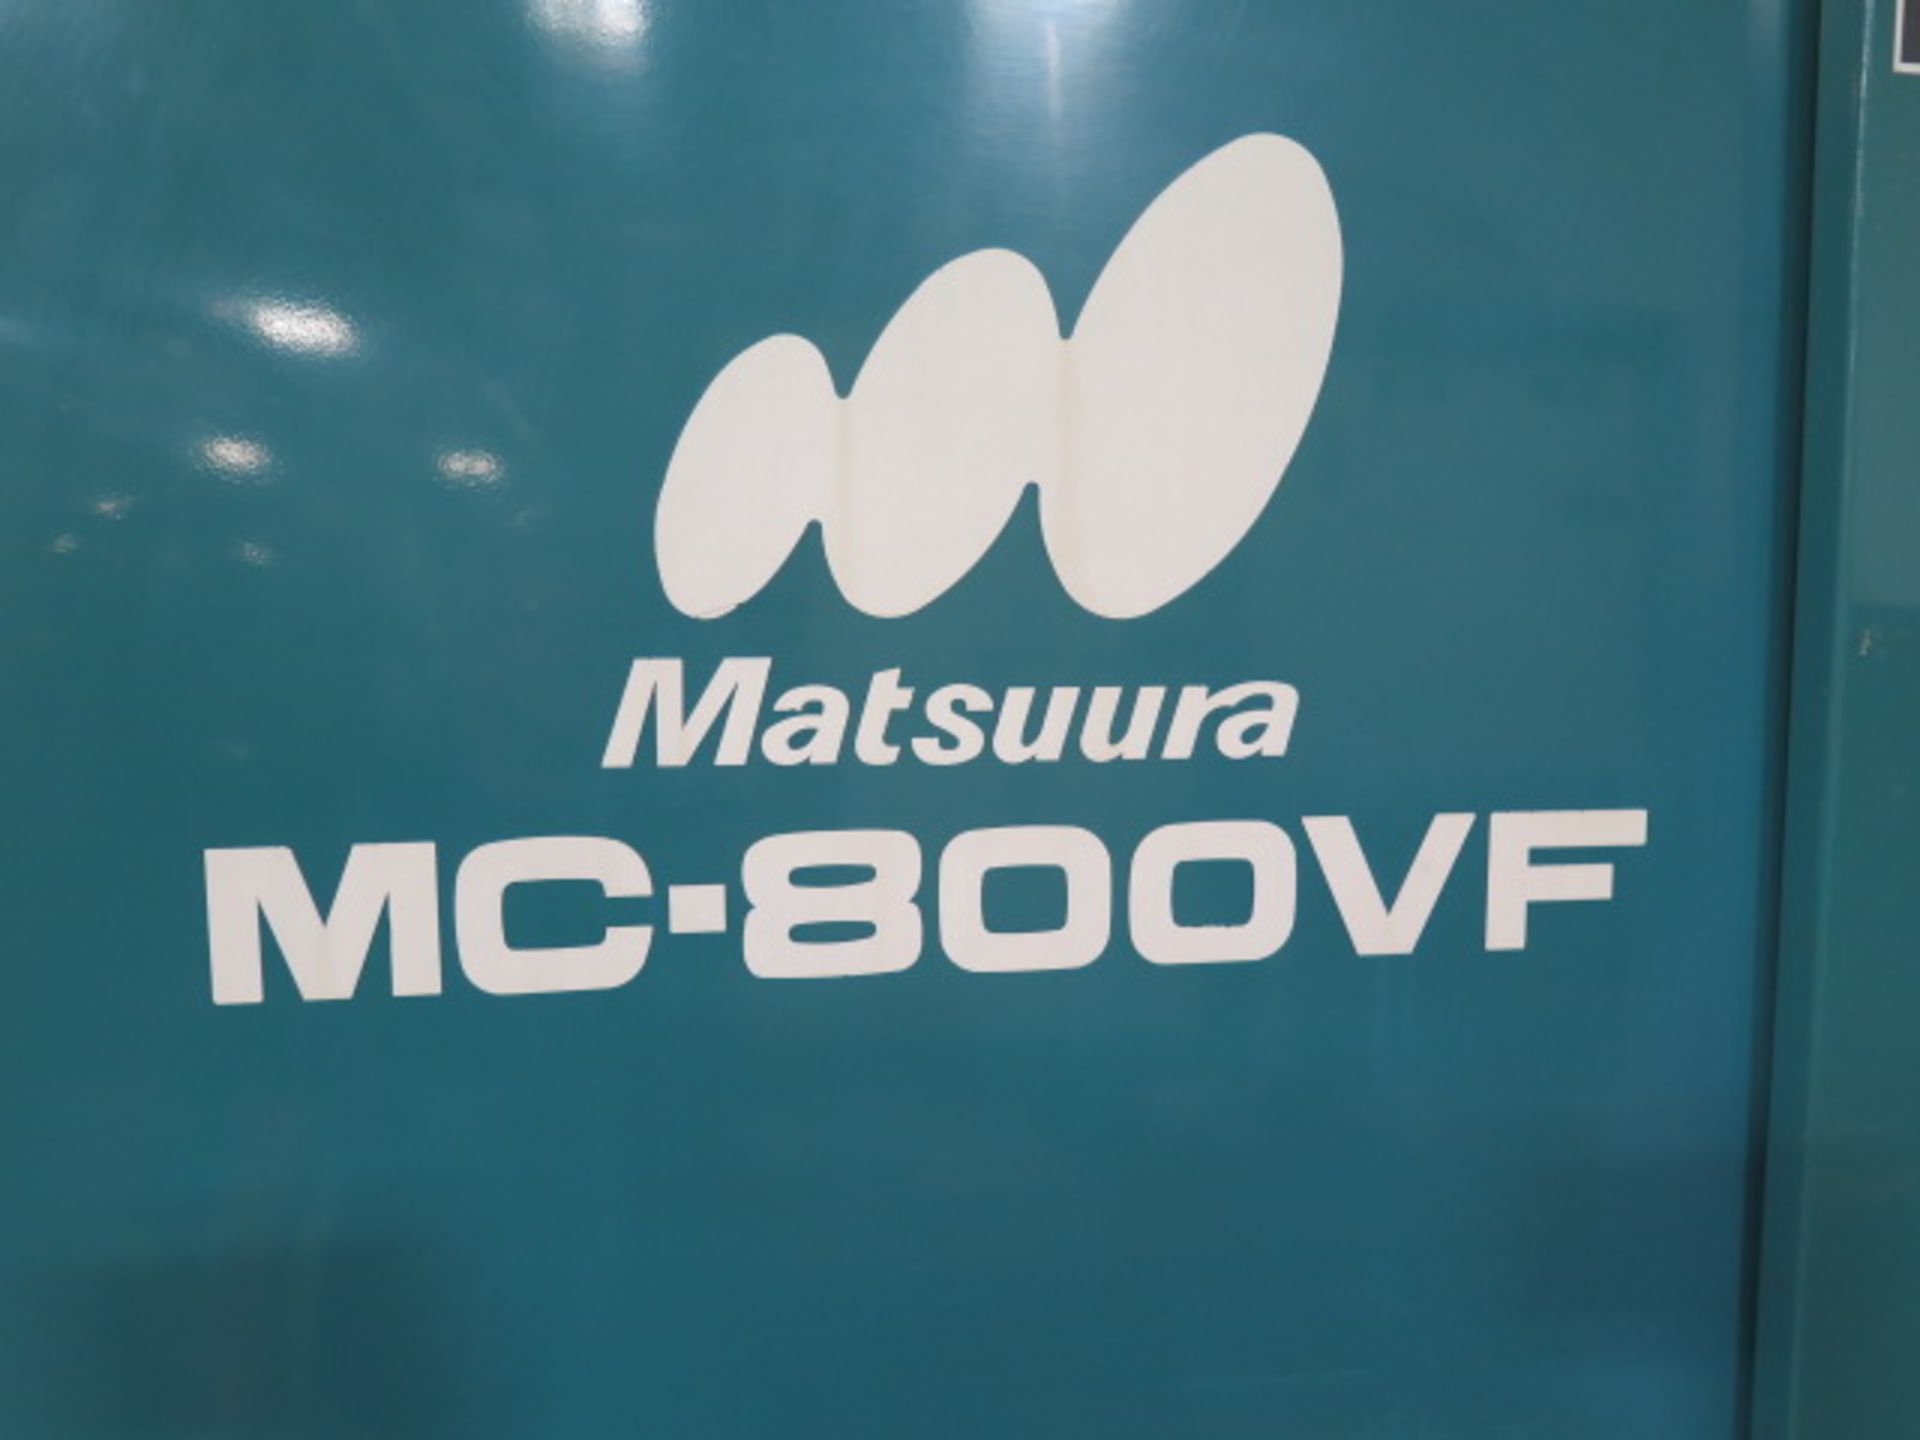 1994 Matsuura MC-800VF CNC Vertical Machining Center s/n 940610773 w/ Yasnac Controls, 30-Station A - Image 4 of 18